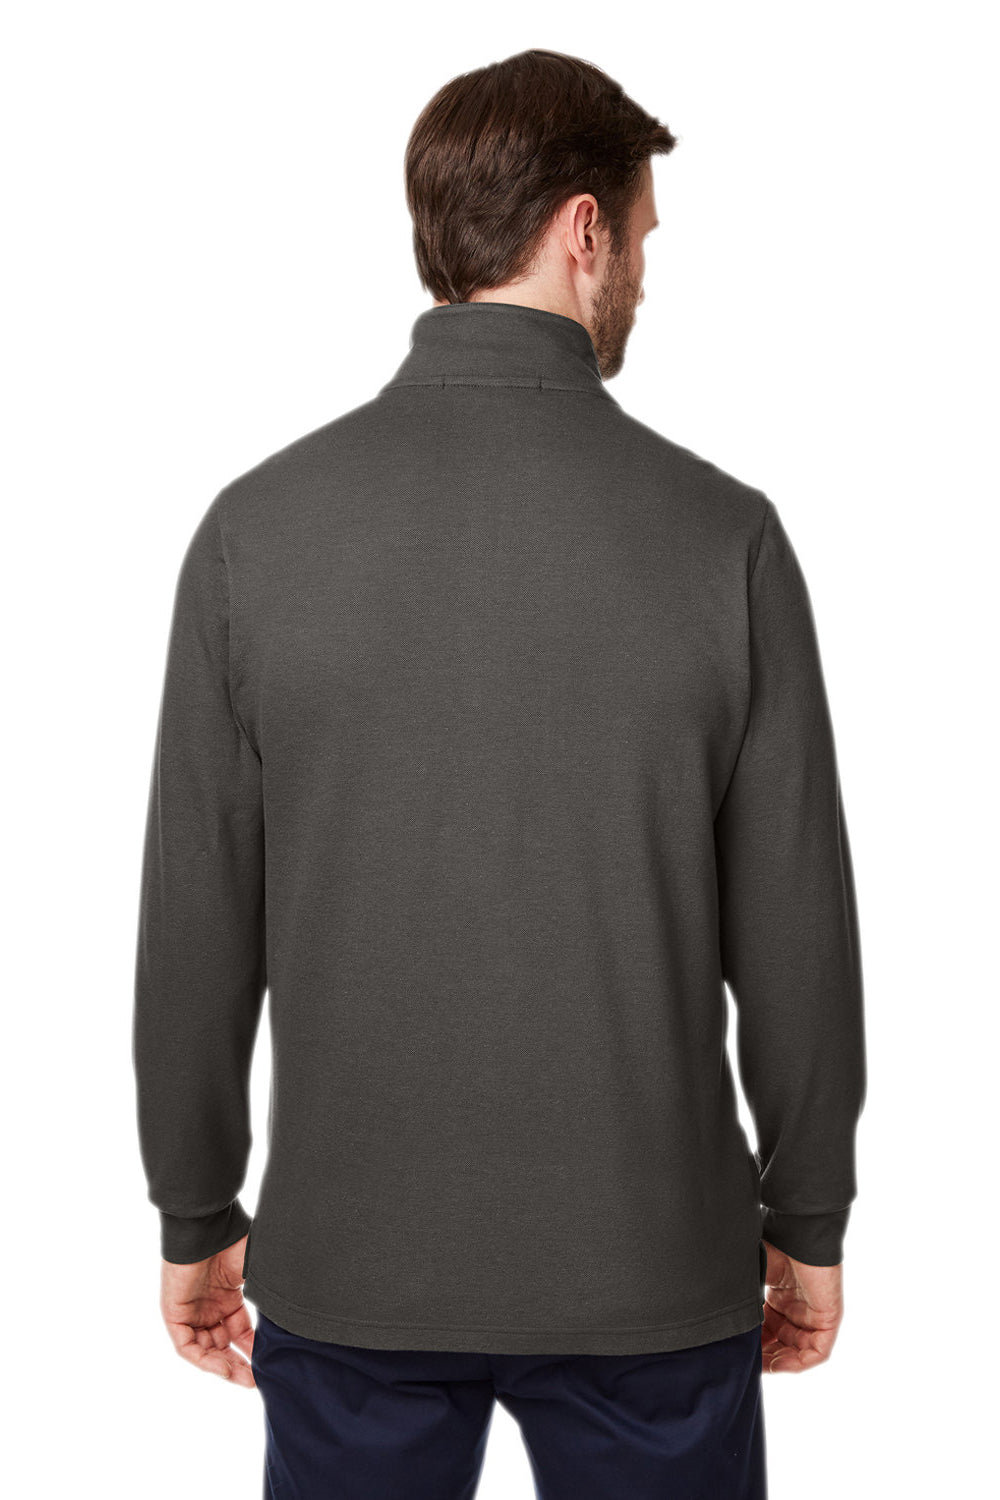 Devon & Jones DG400 Mens New Classics Performance Moisture Wicking 1/4 Zip Sweatshirt Graphite Grey Back